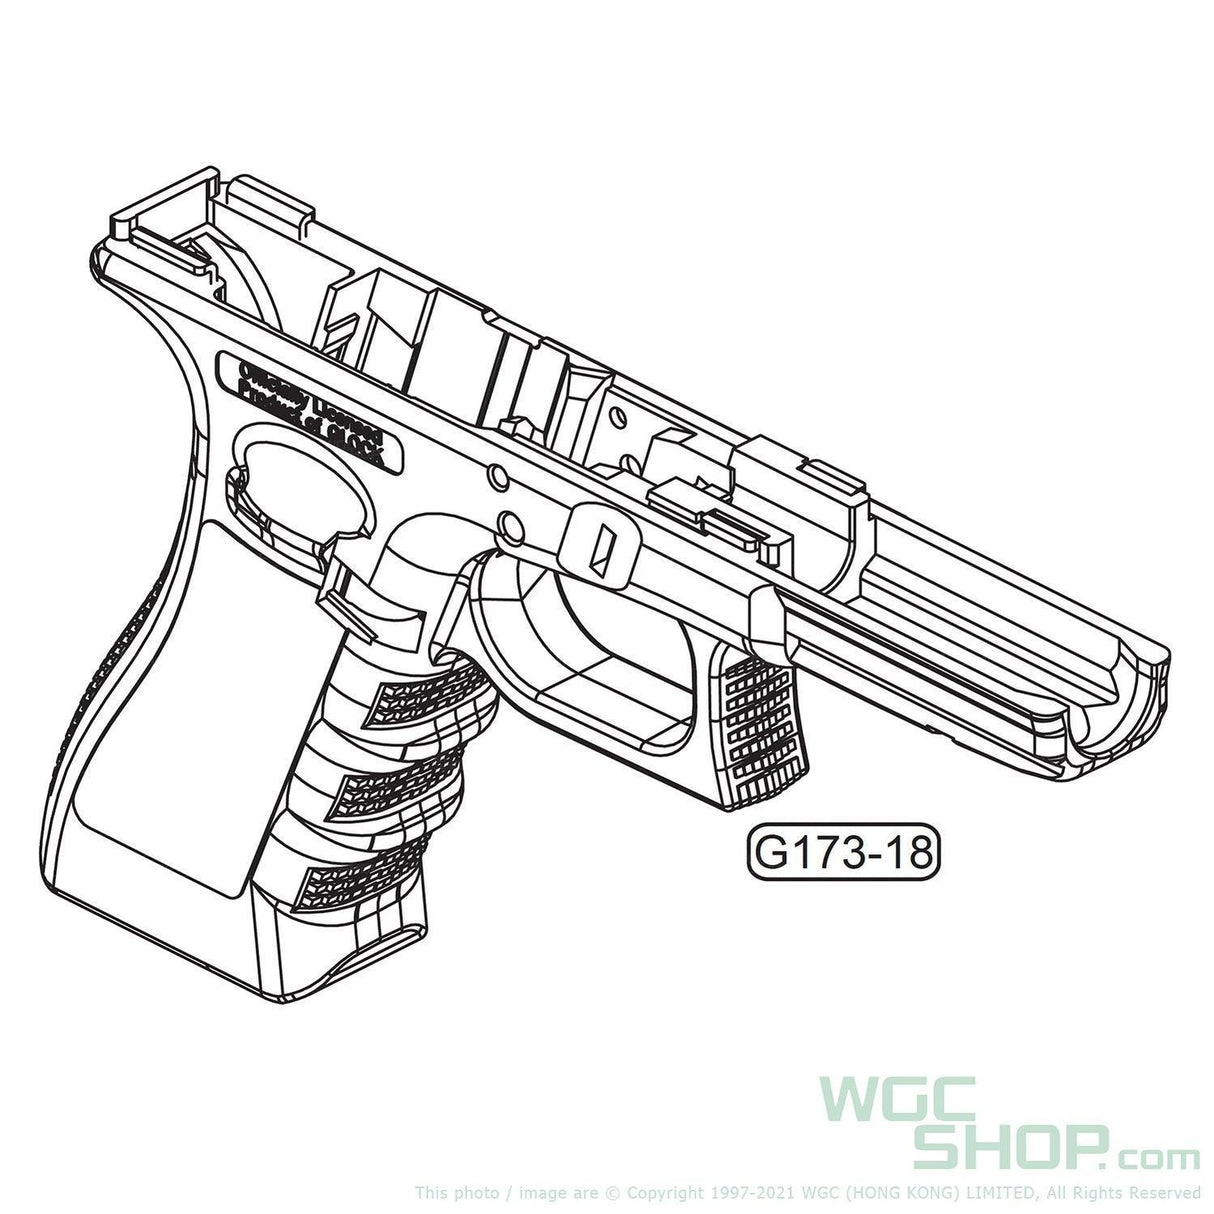 GHK Original Parts - Frame for Glock G17 Gen3 GBB Airsoft ( G173-18 ) - WGC Shop